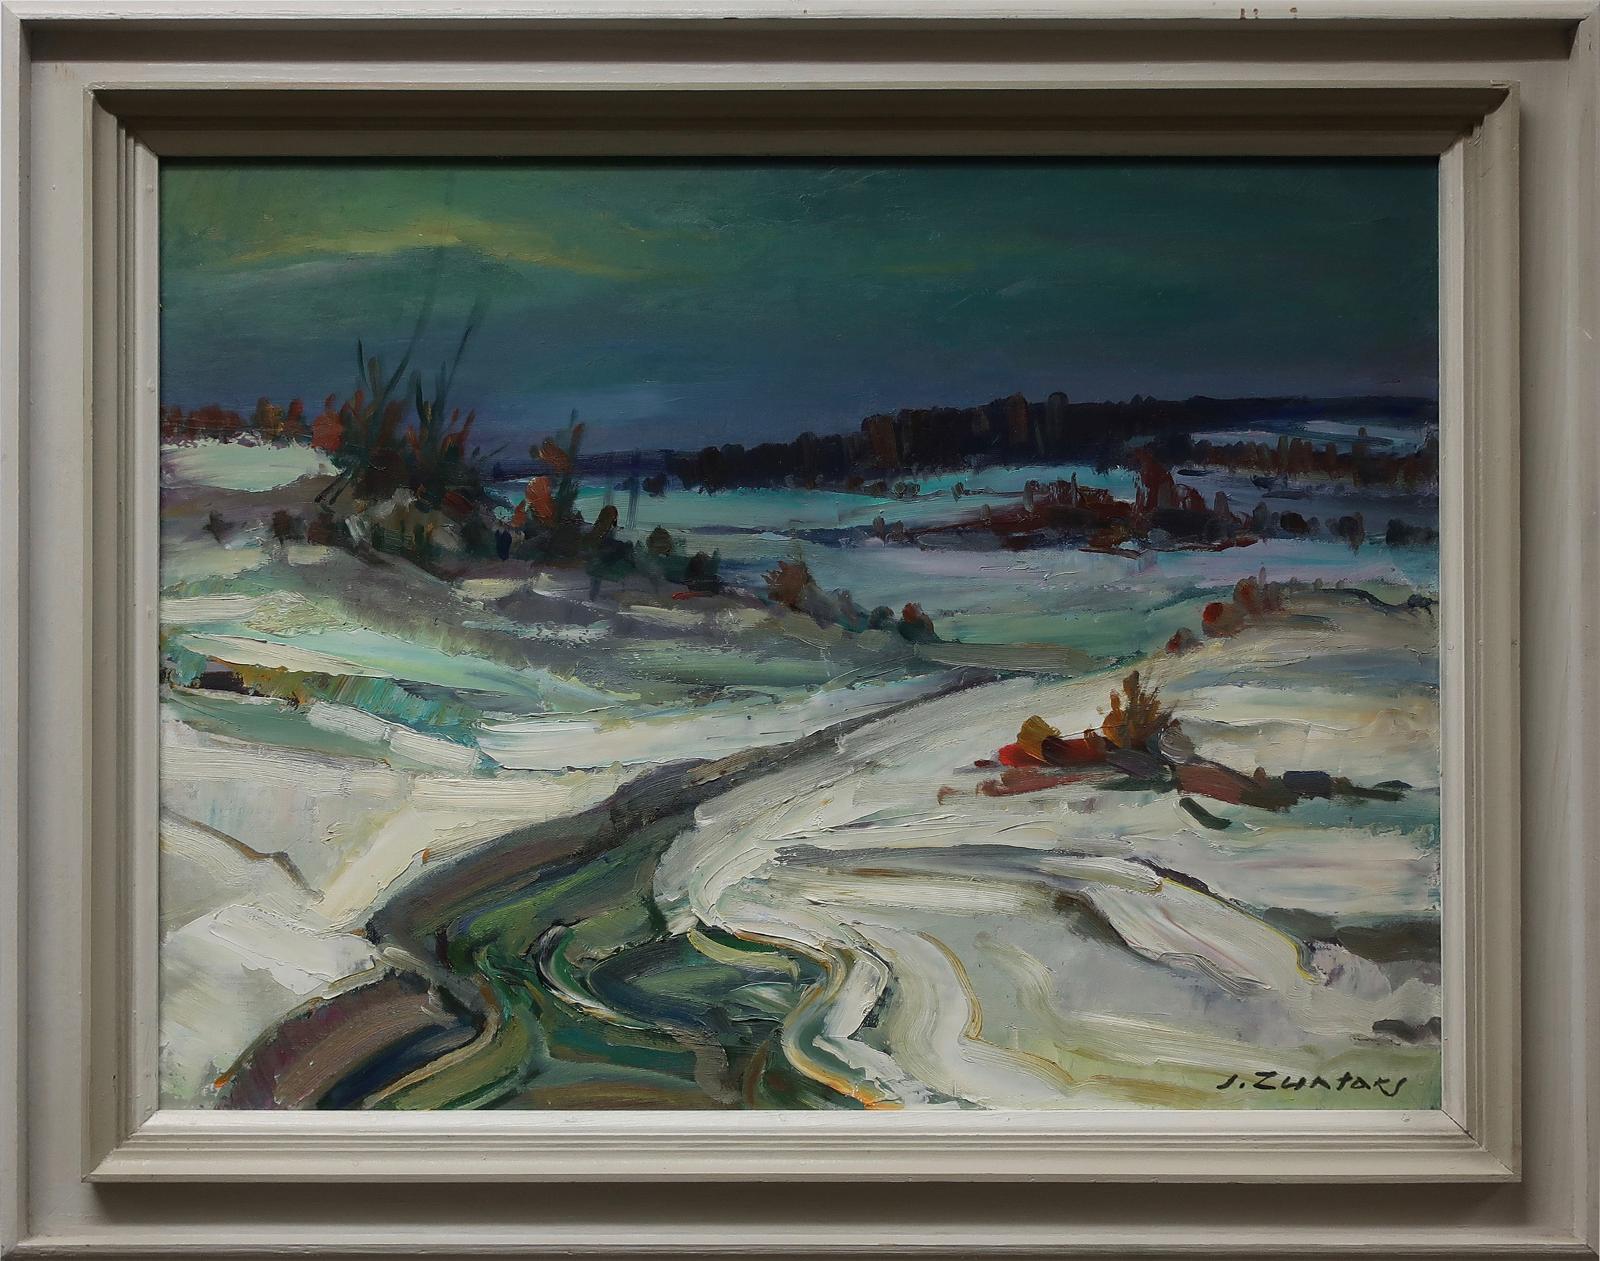 Janis Rudolfs Zuntaks (1906-1985) - Untitled (Winter Landscape At Dusk)